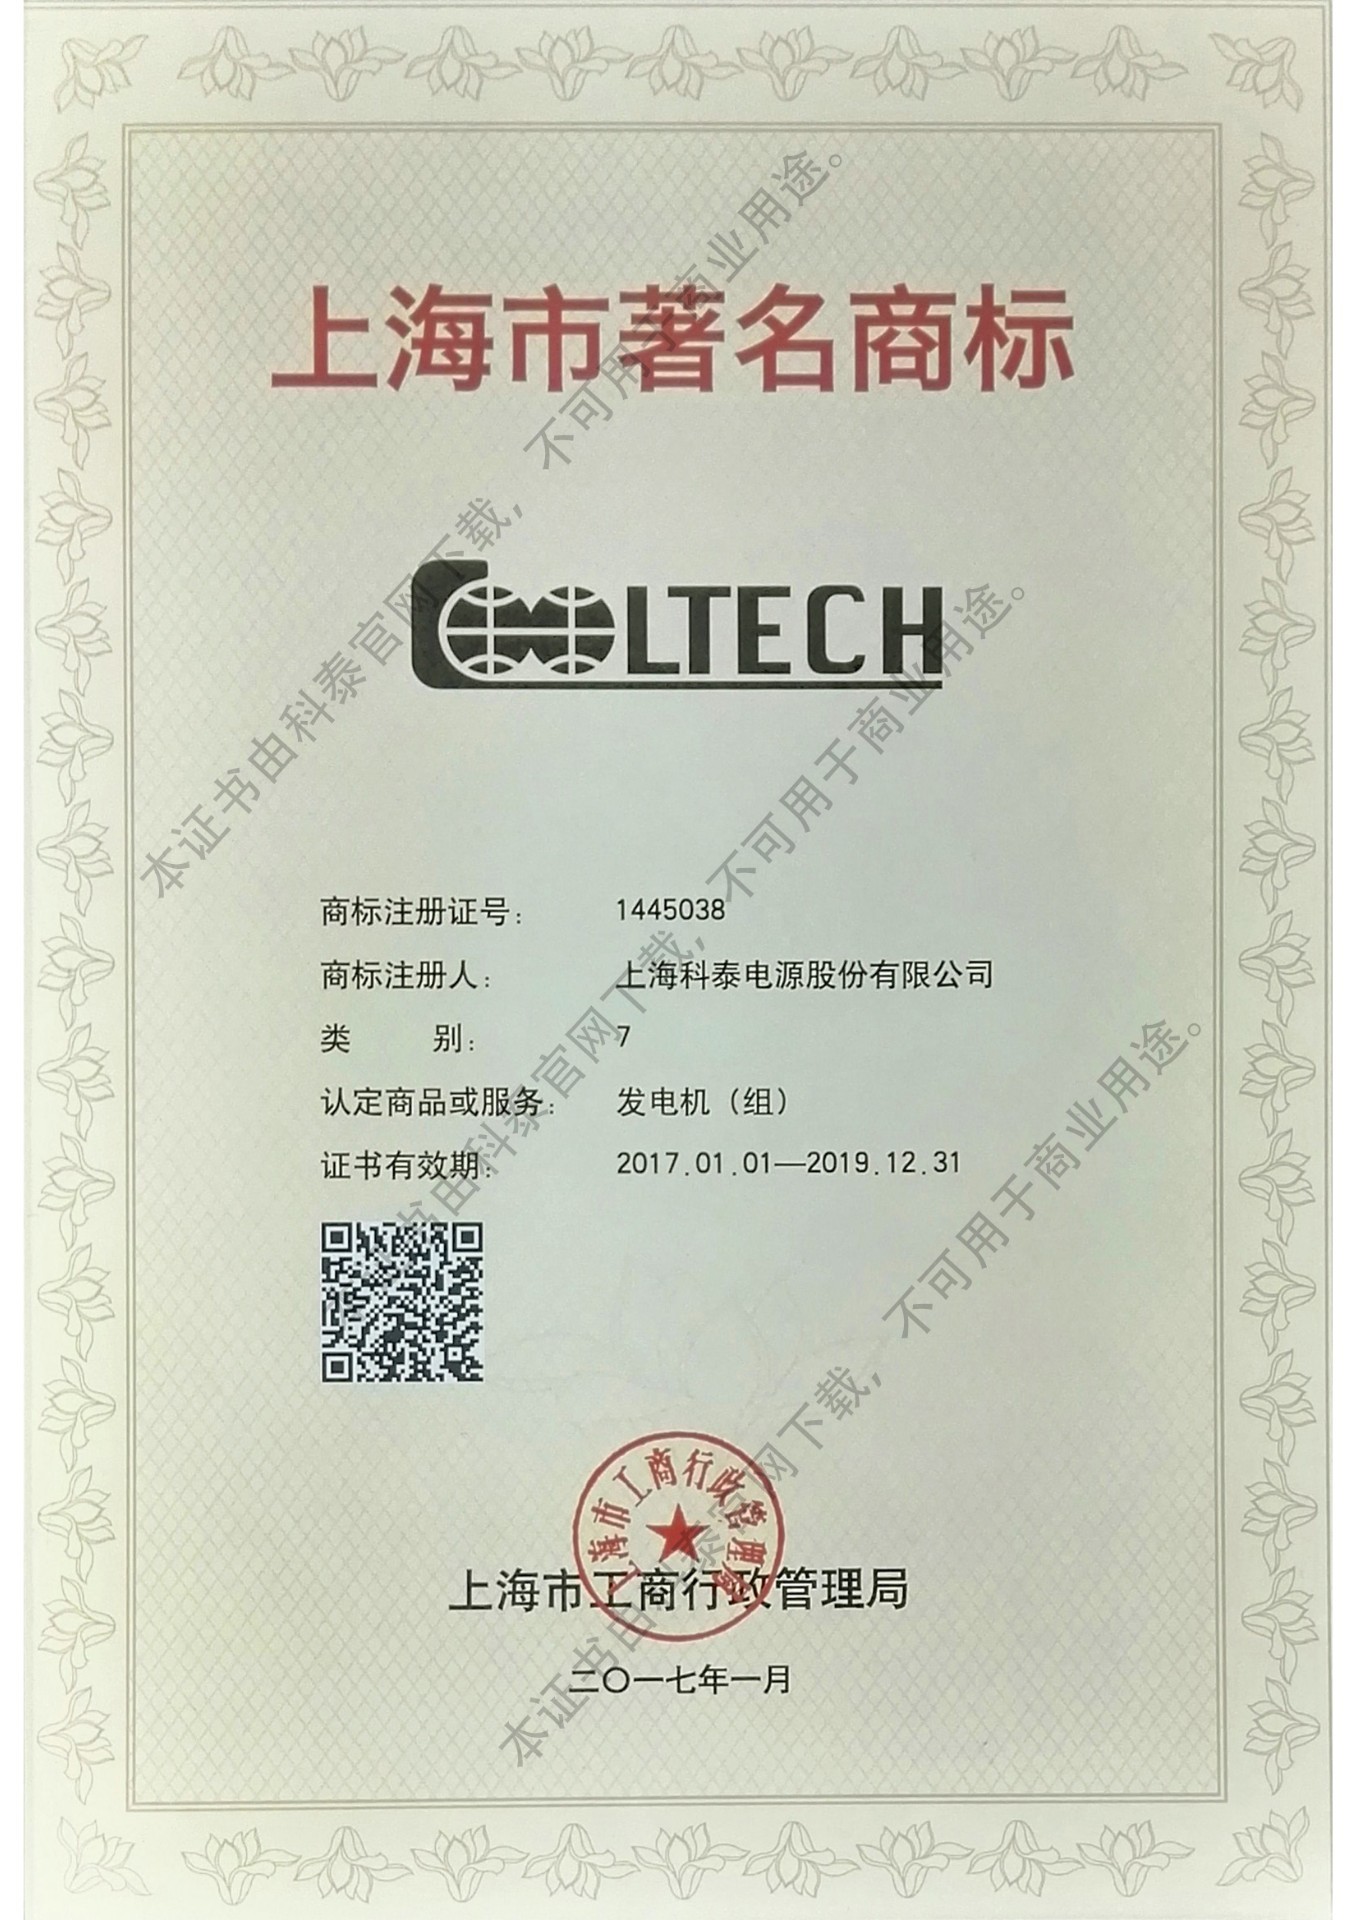 Shanghai Famous Trademark Certificate